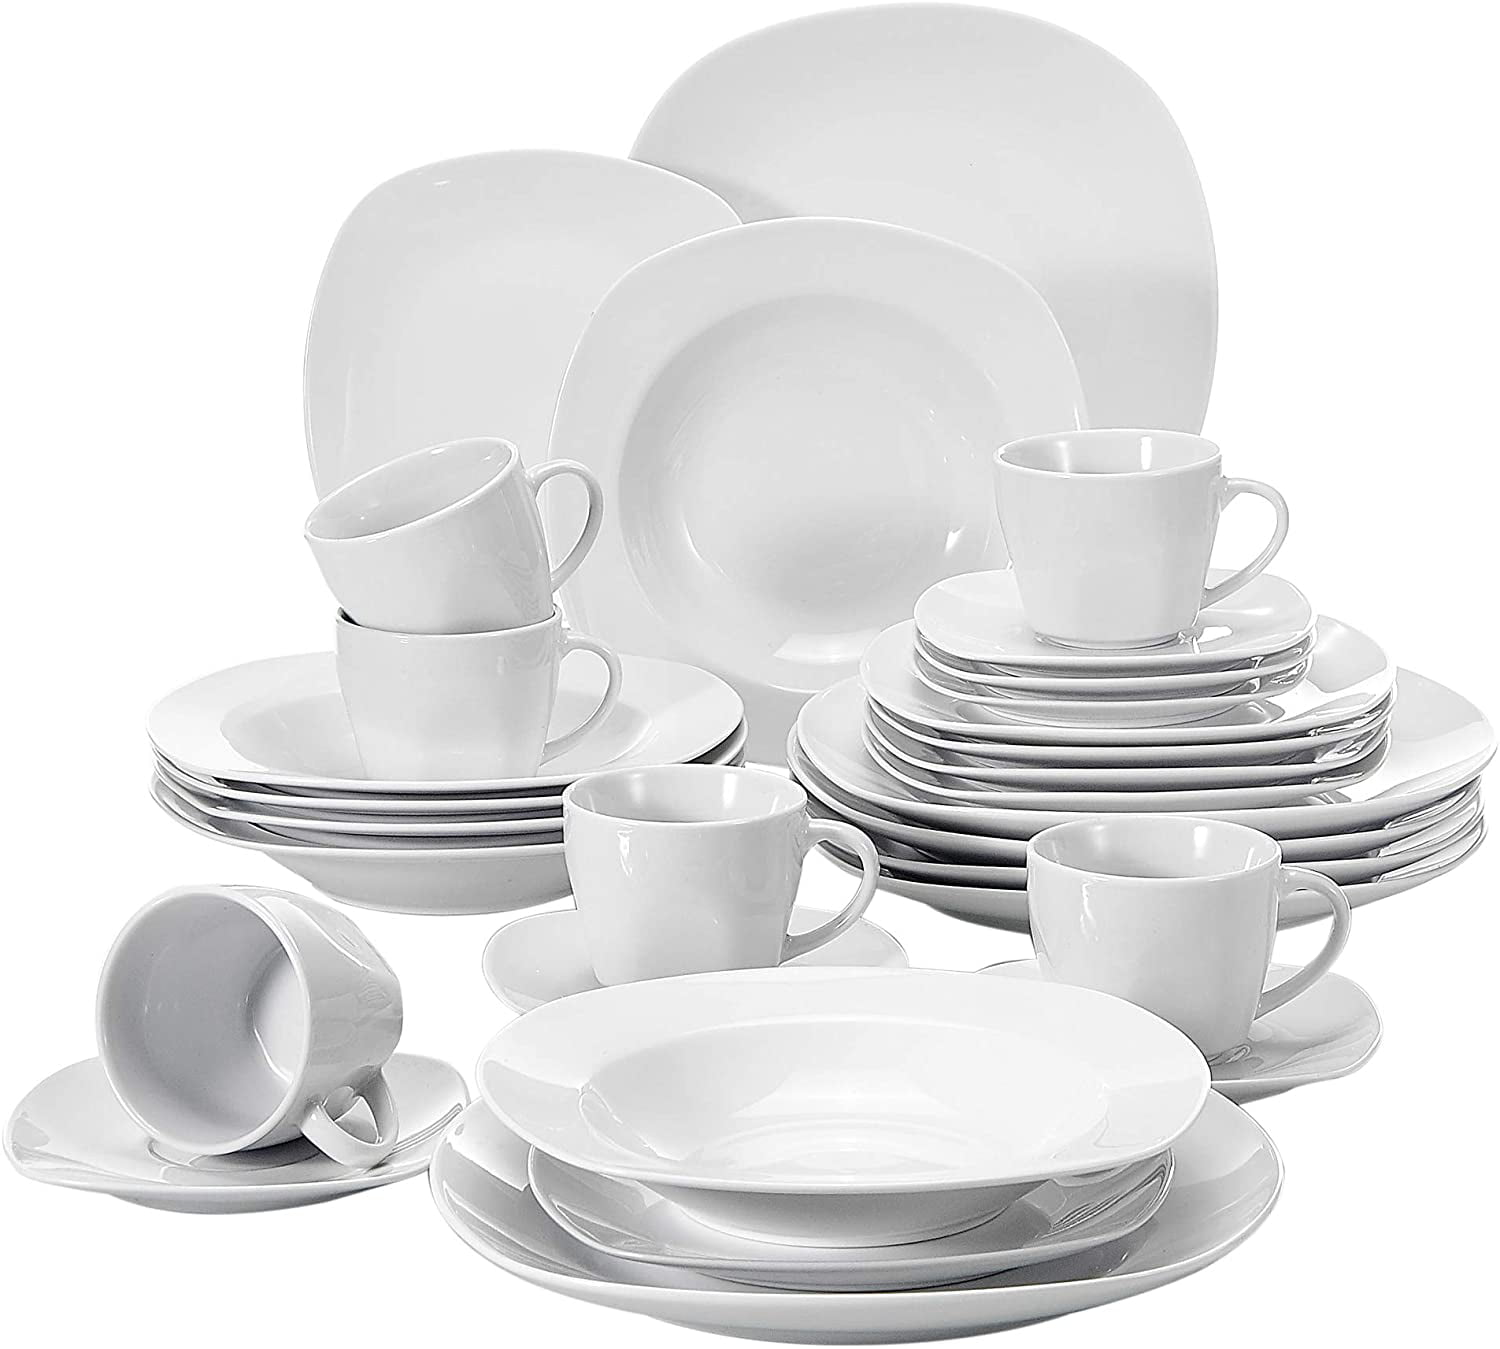 MALACASA Blance 18-Piece Porcelain Dessert Plates with Cups /& Saucers Set White